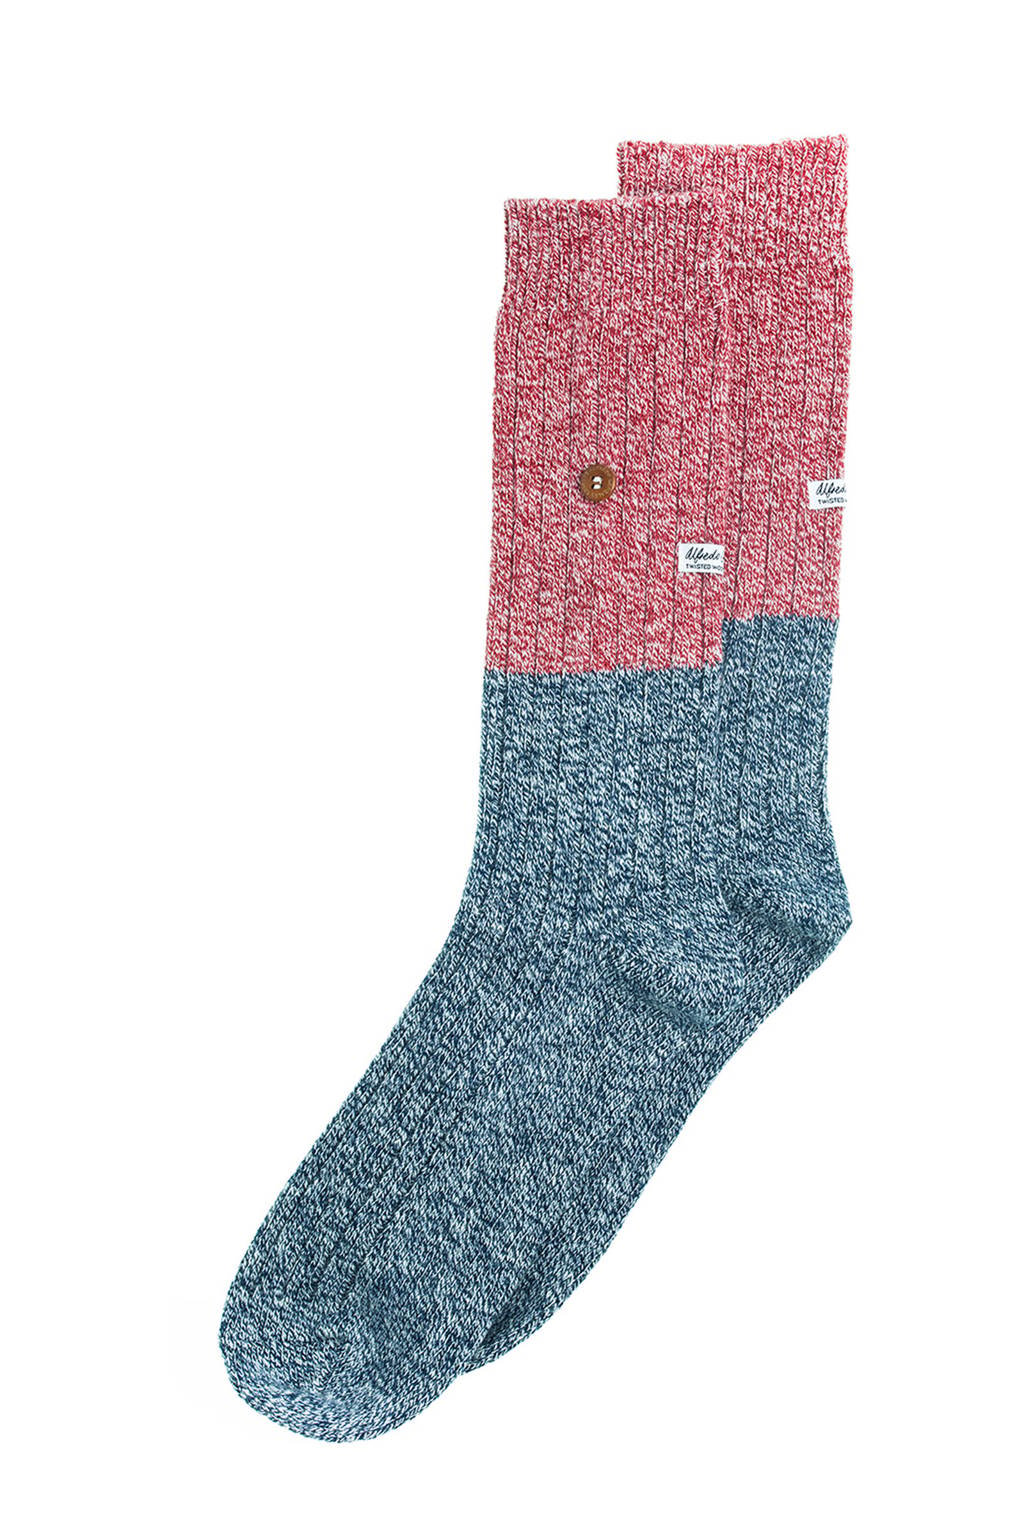 Alfredo Gonzales sokken Twisted Wool rood/donkerblauw, Rood/donkerblauw